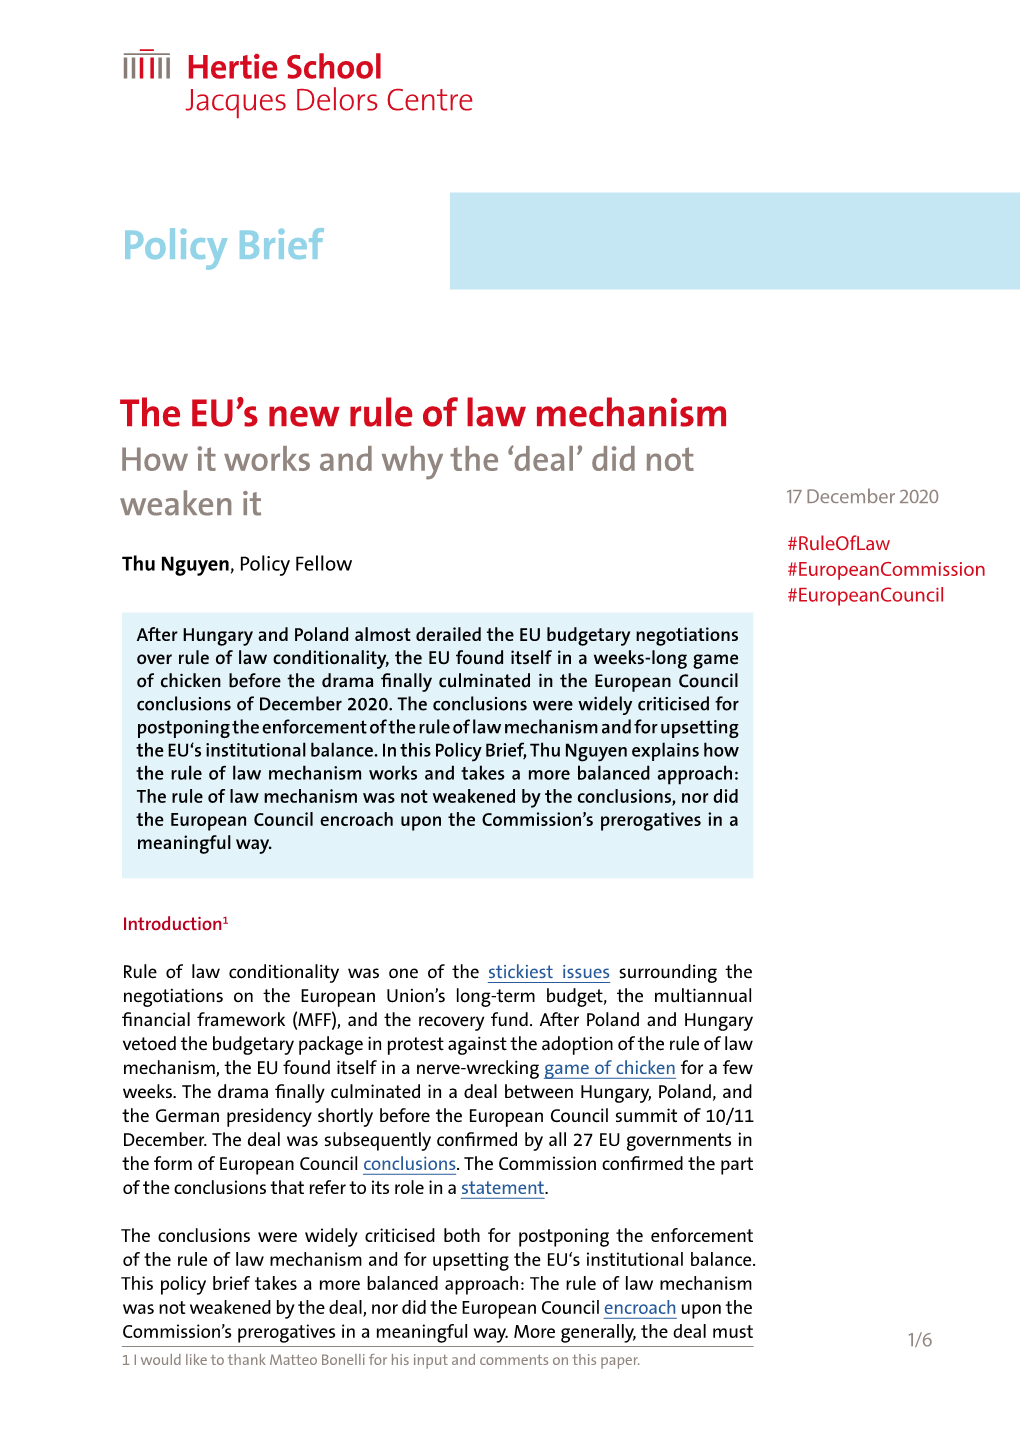 The EU's New Rule of Law Mechanism